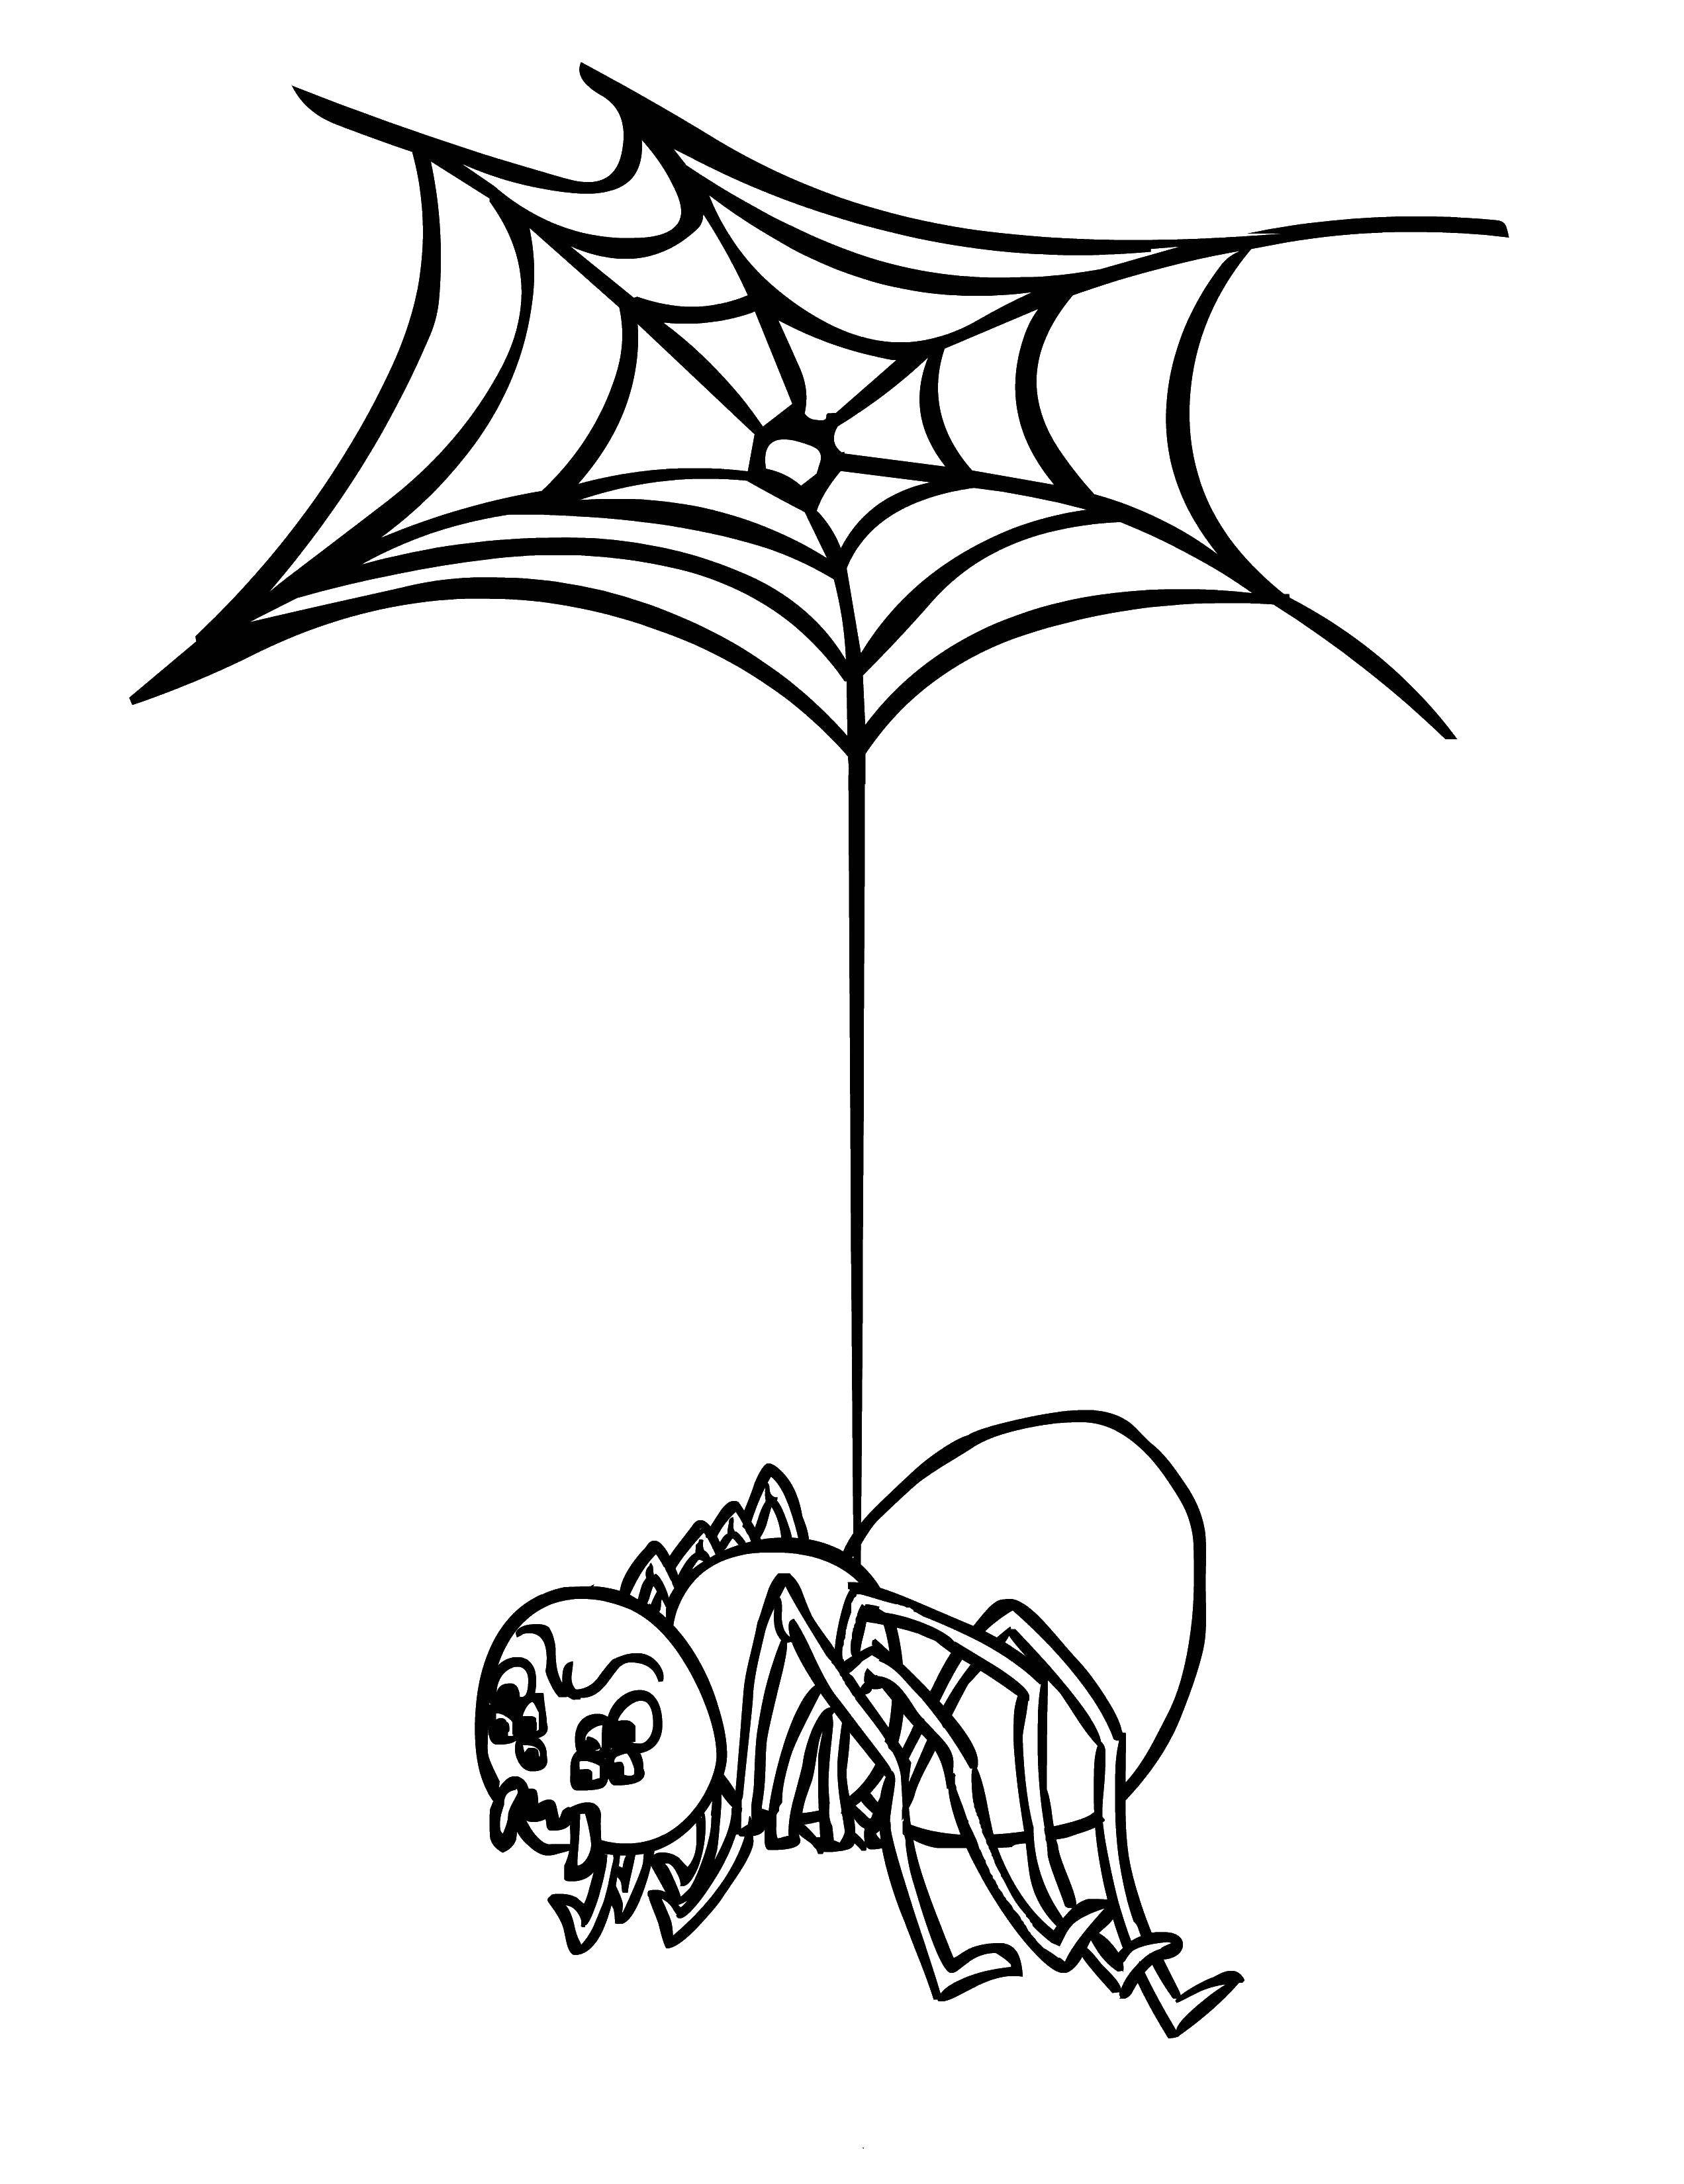 Название: Раскраска Паук на паутине. Категория: пауки. Теги: паук, паутина.